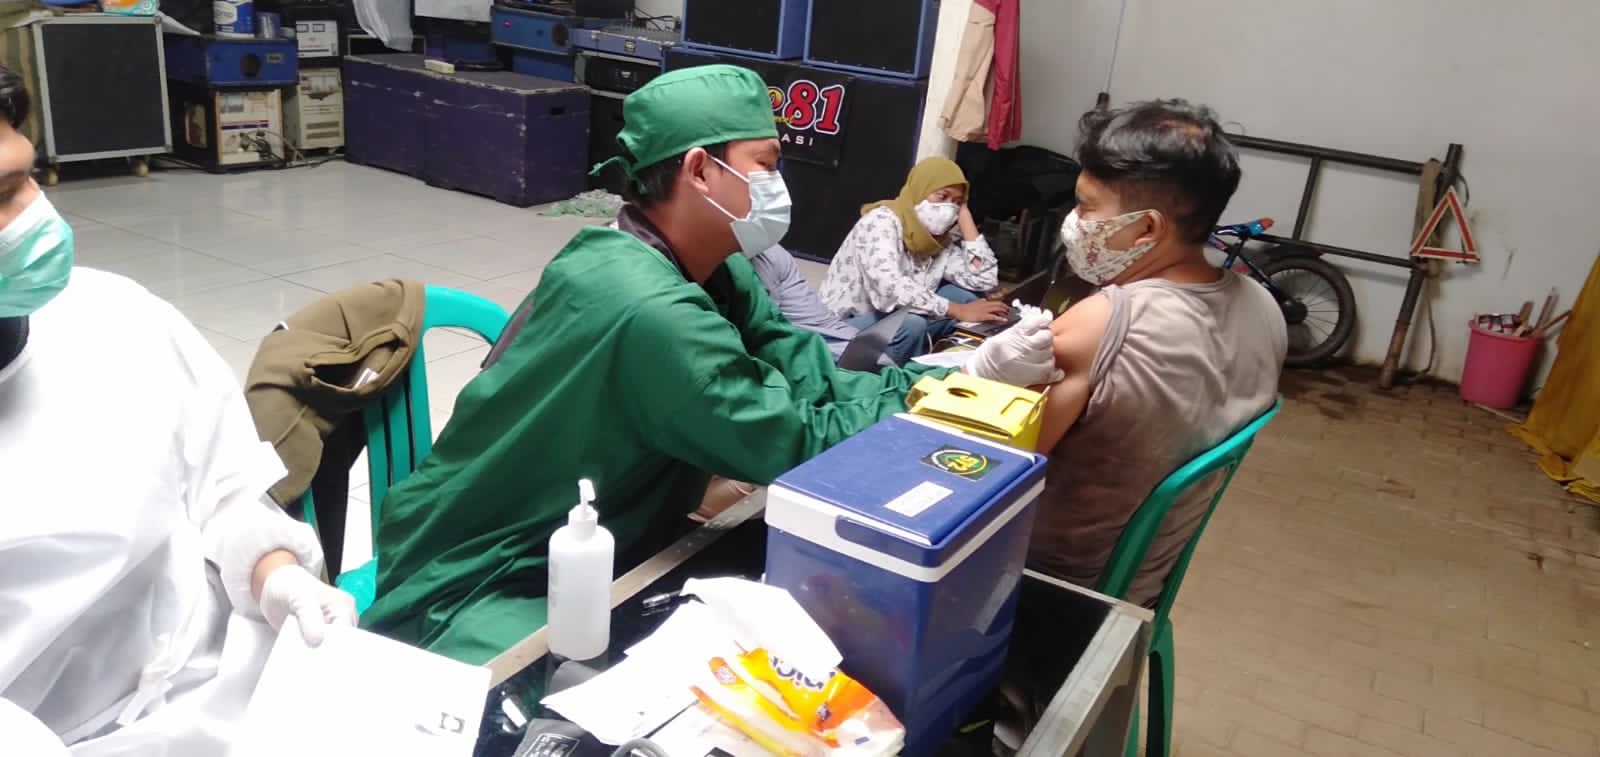 Lurah Mustika Sari Ismail Marzuki Bersama Polsek Bantargebang Melaksanakan Giat Vaksinasi Merdeka